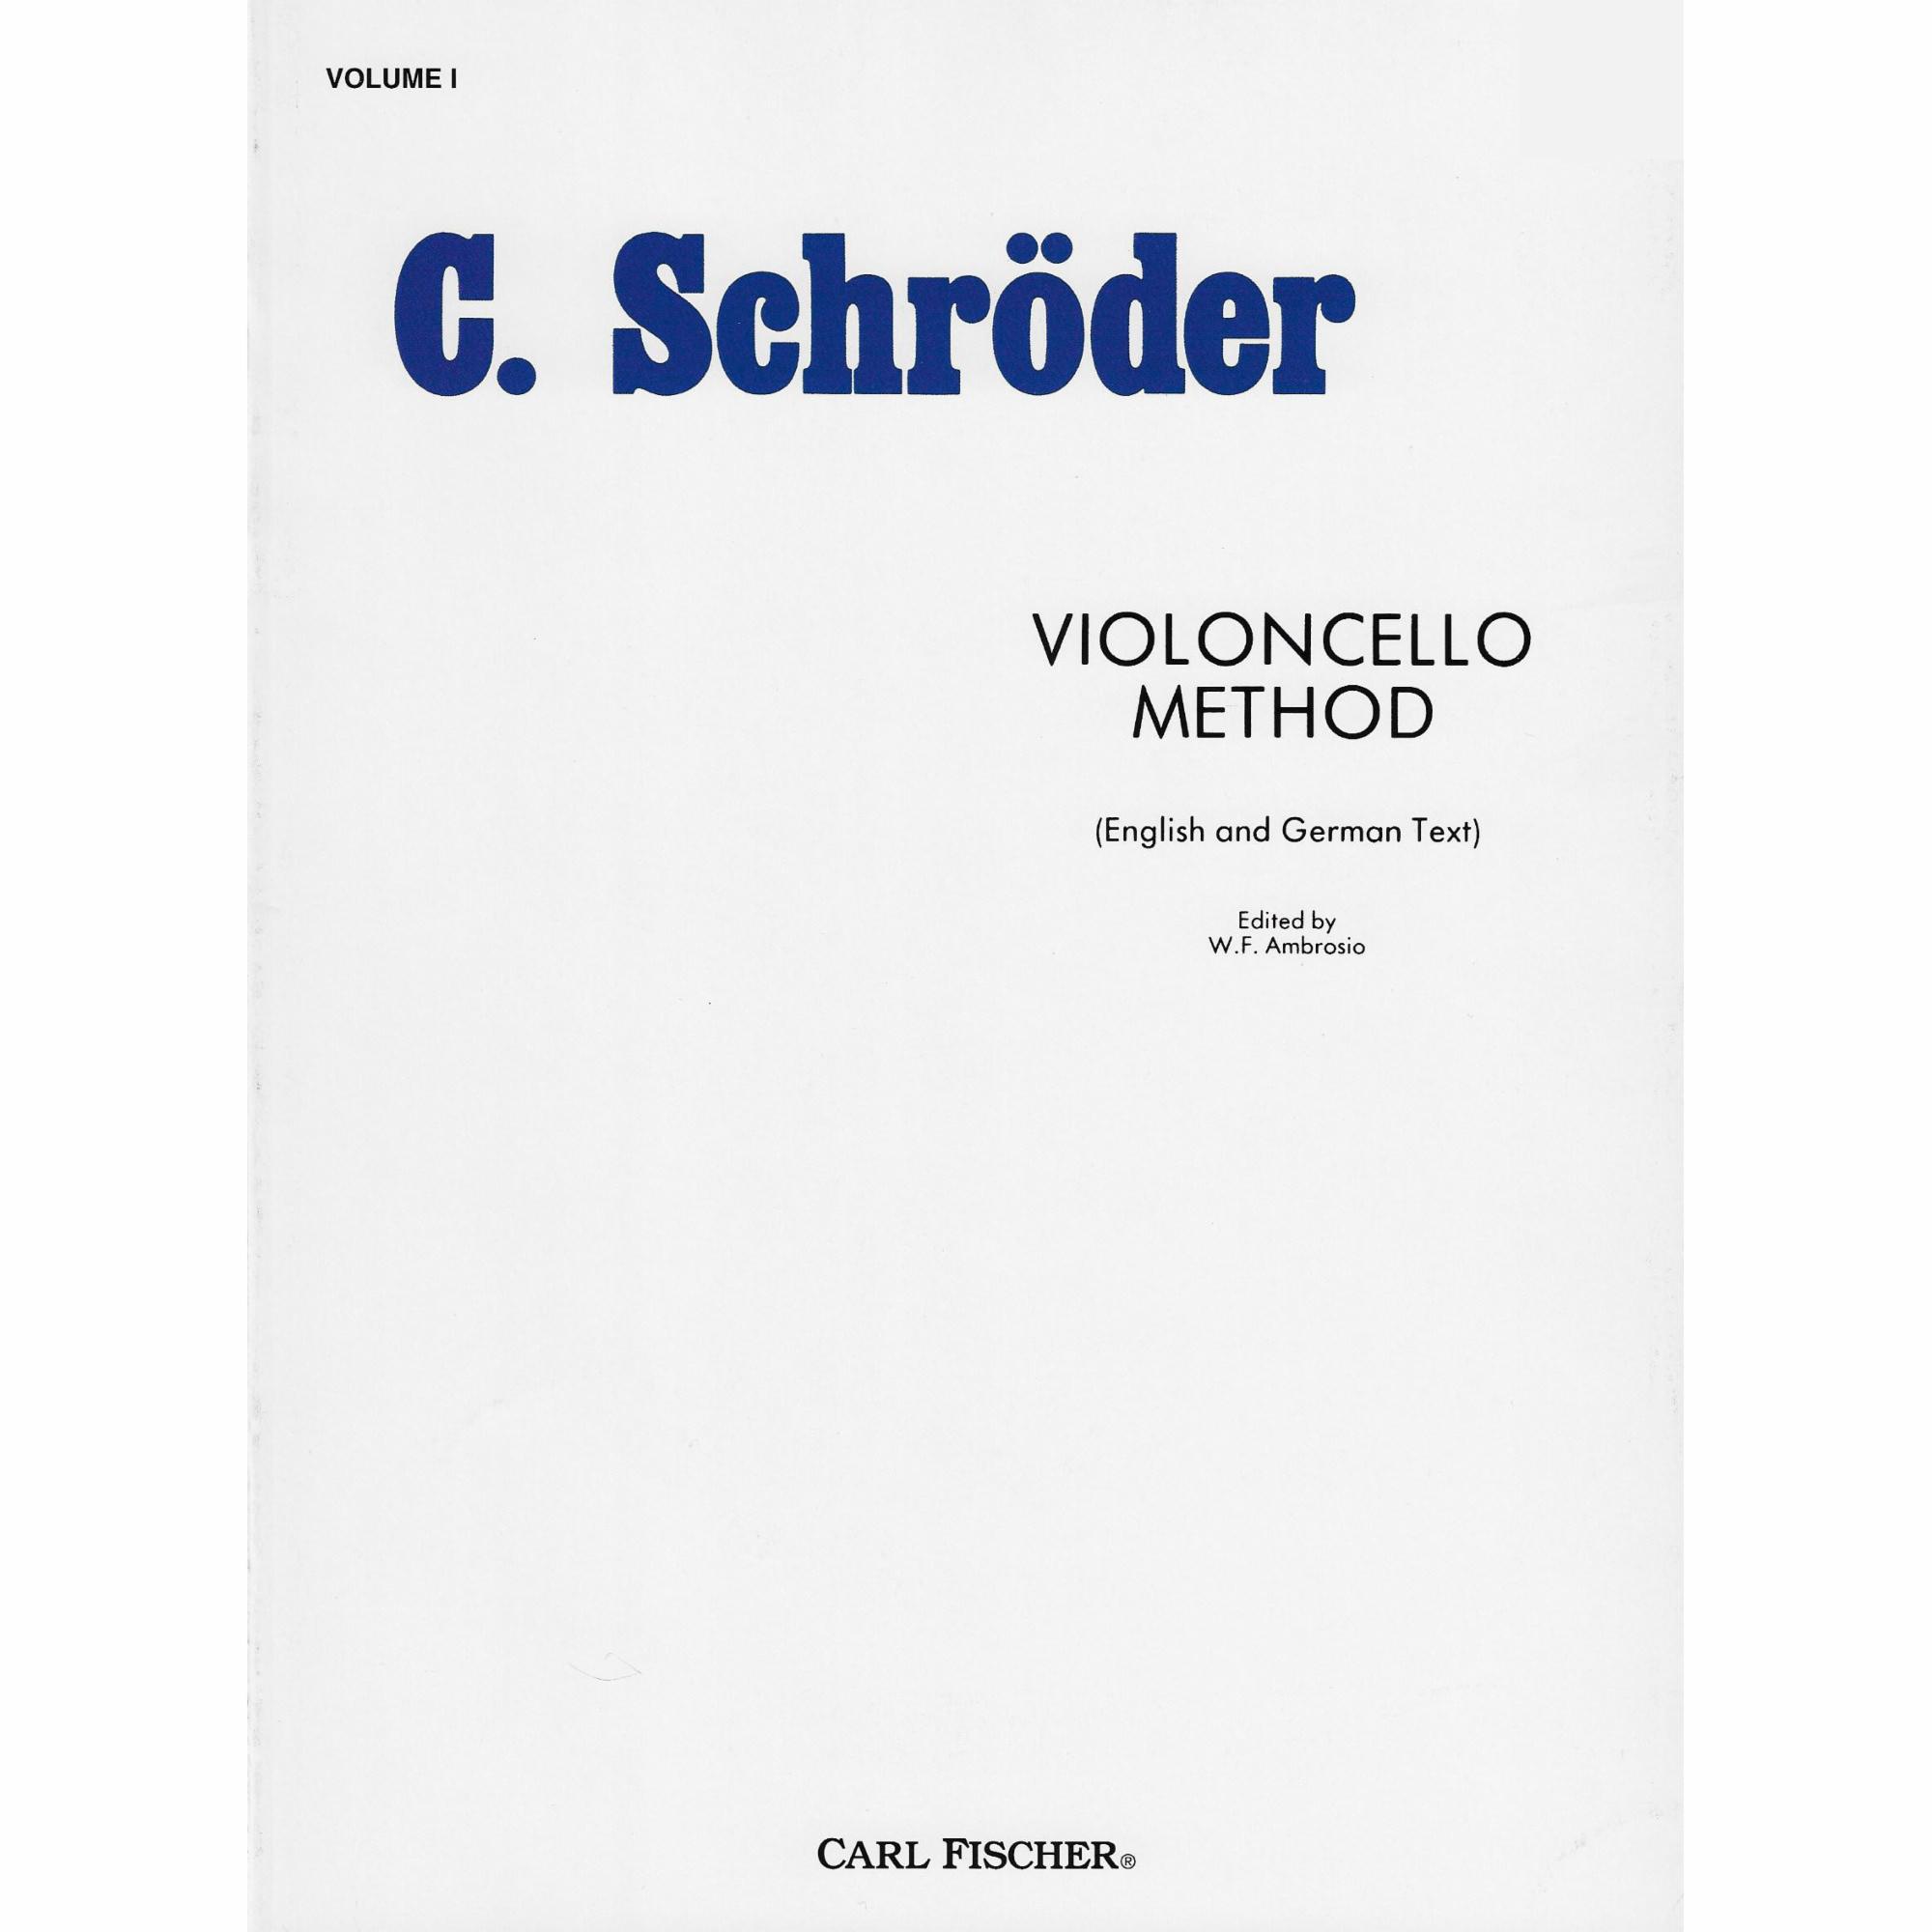 Schroeder -- Violoncello Method, Vols. 1-3